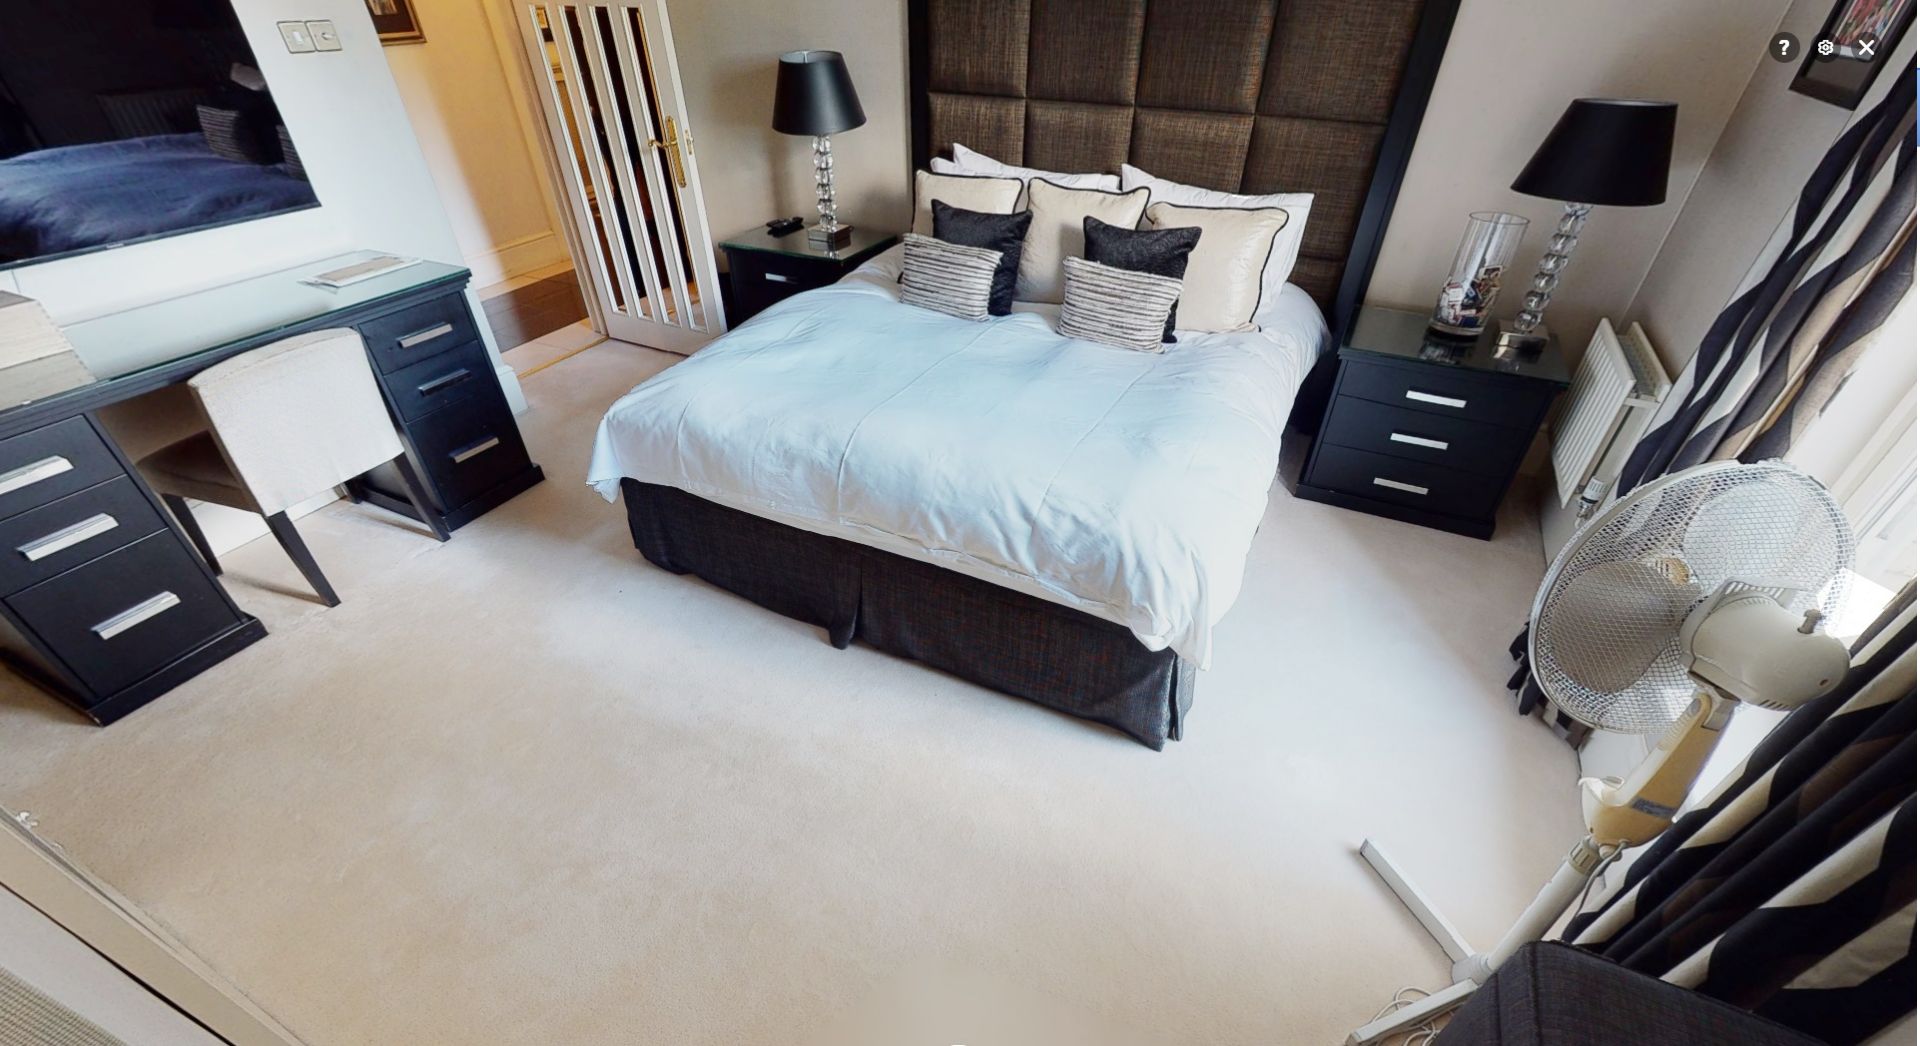 1 x Premium  Bed Room Carpet In A Soft Beige - Main Area Of The Carpet Measures 4.2 x 3.2 Metres